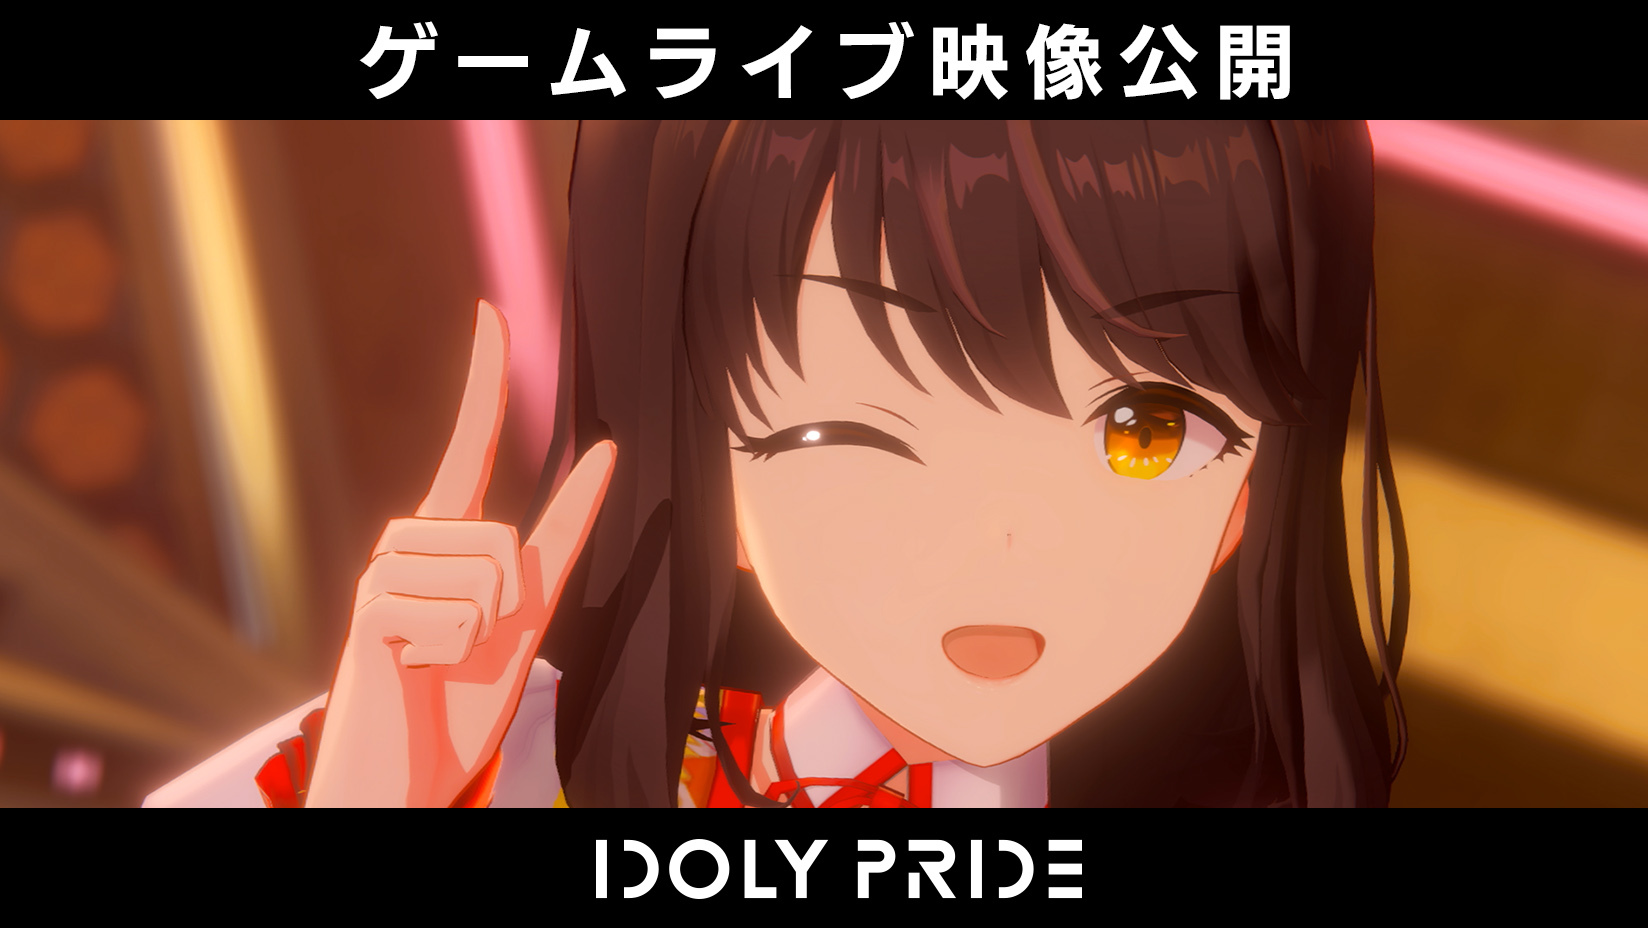 EVERYDAY! SUNNYDAY! / サニーピース動画より (c) 2019 Project IDOLY PRIDE